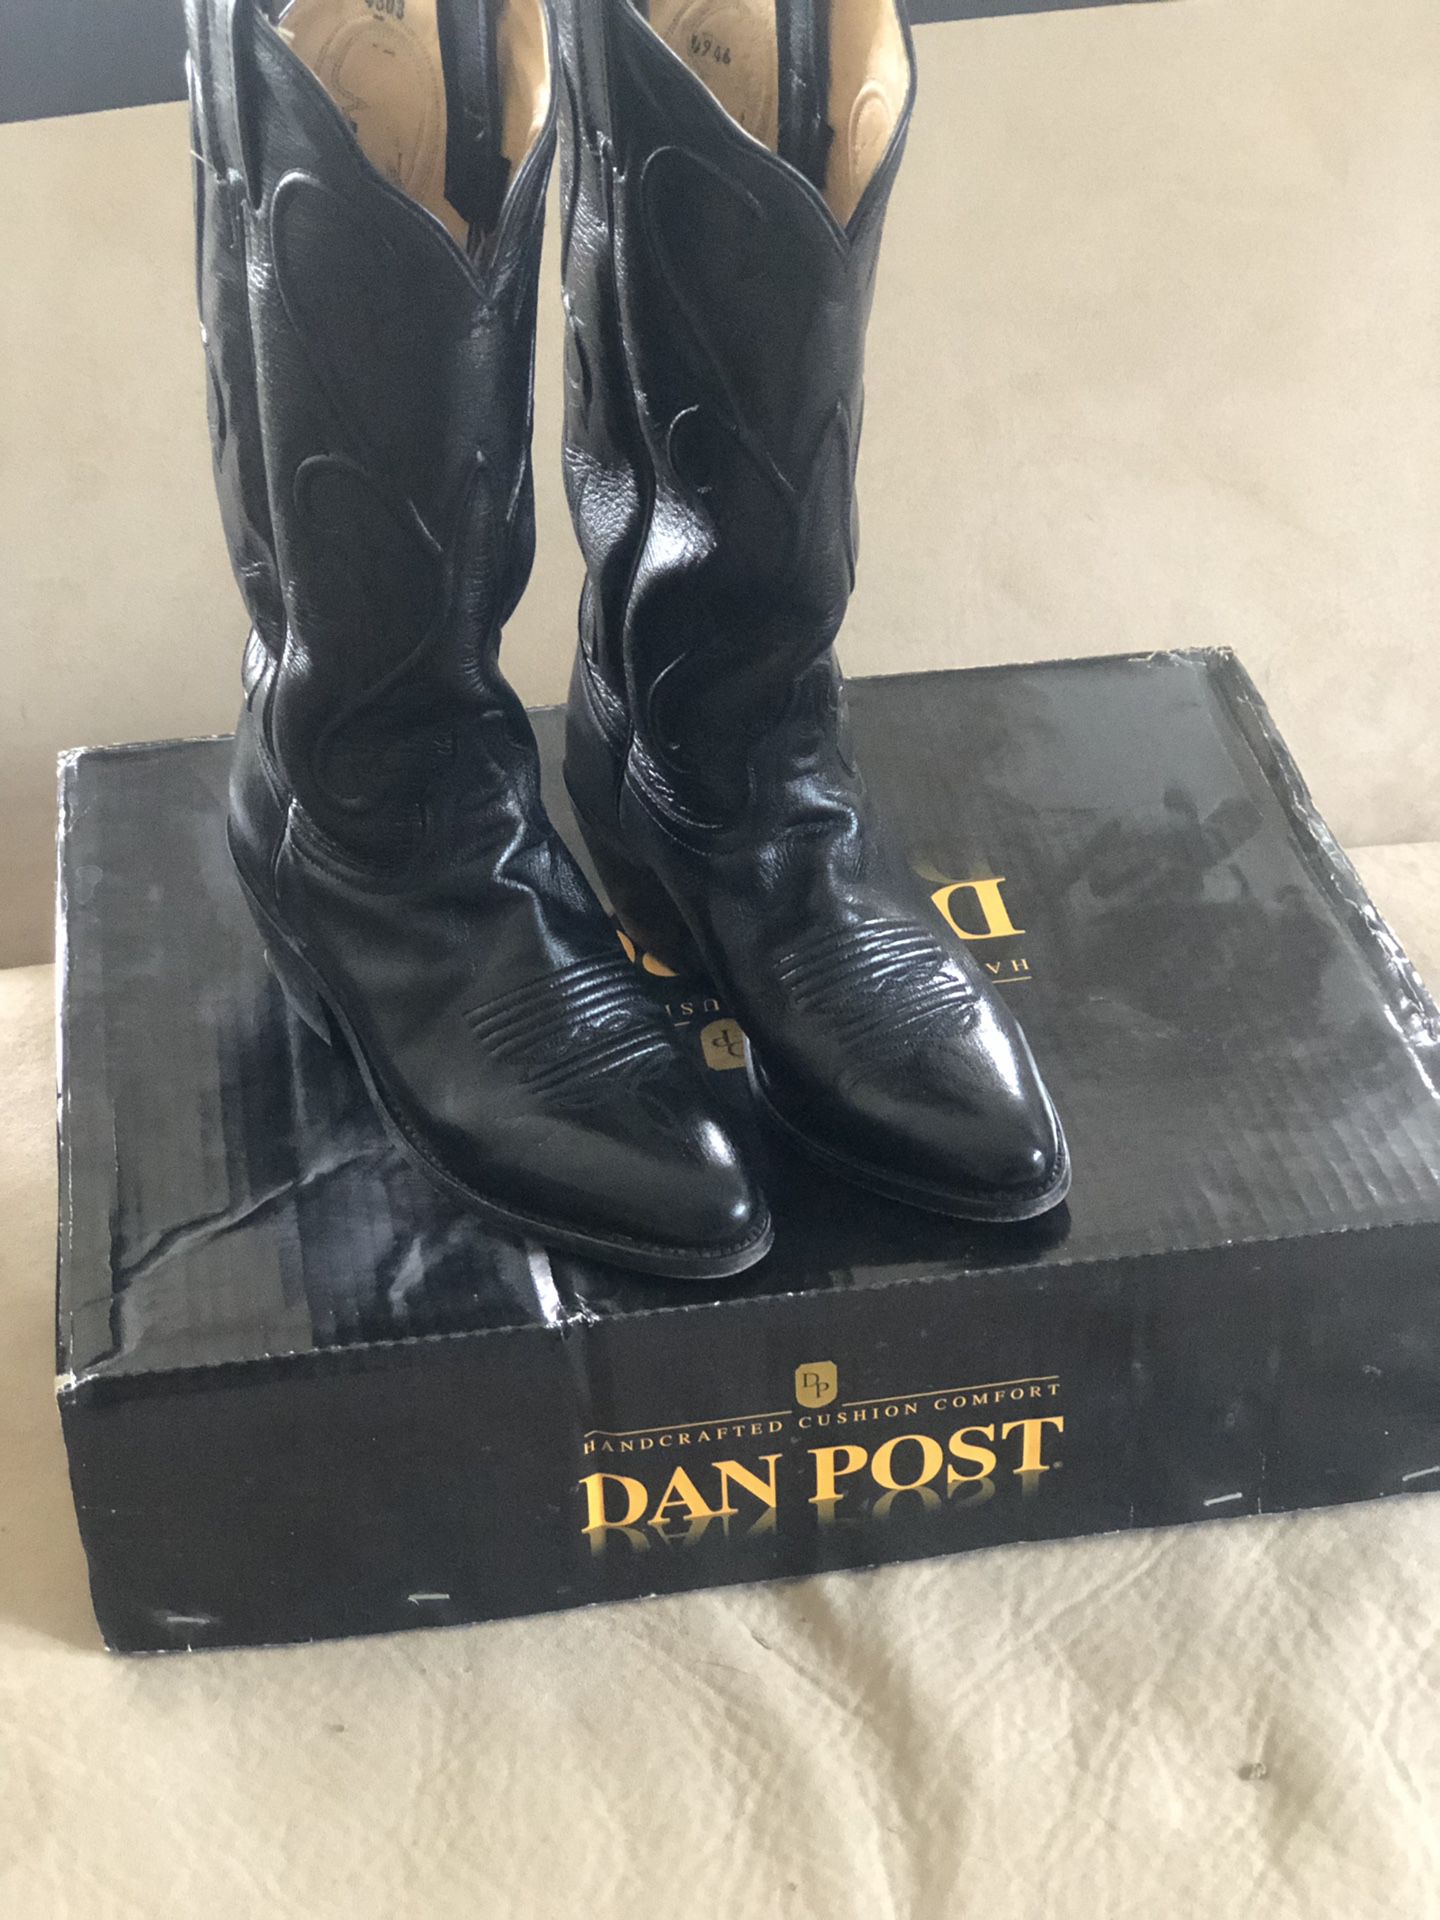 Dan Post lady’s boot size 7.